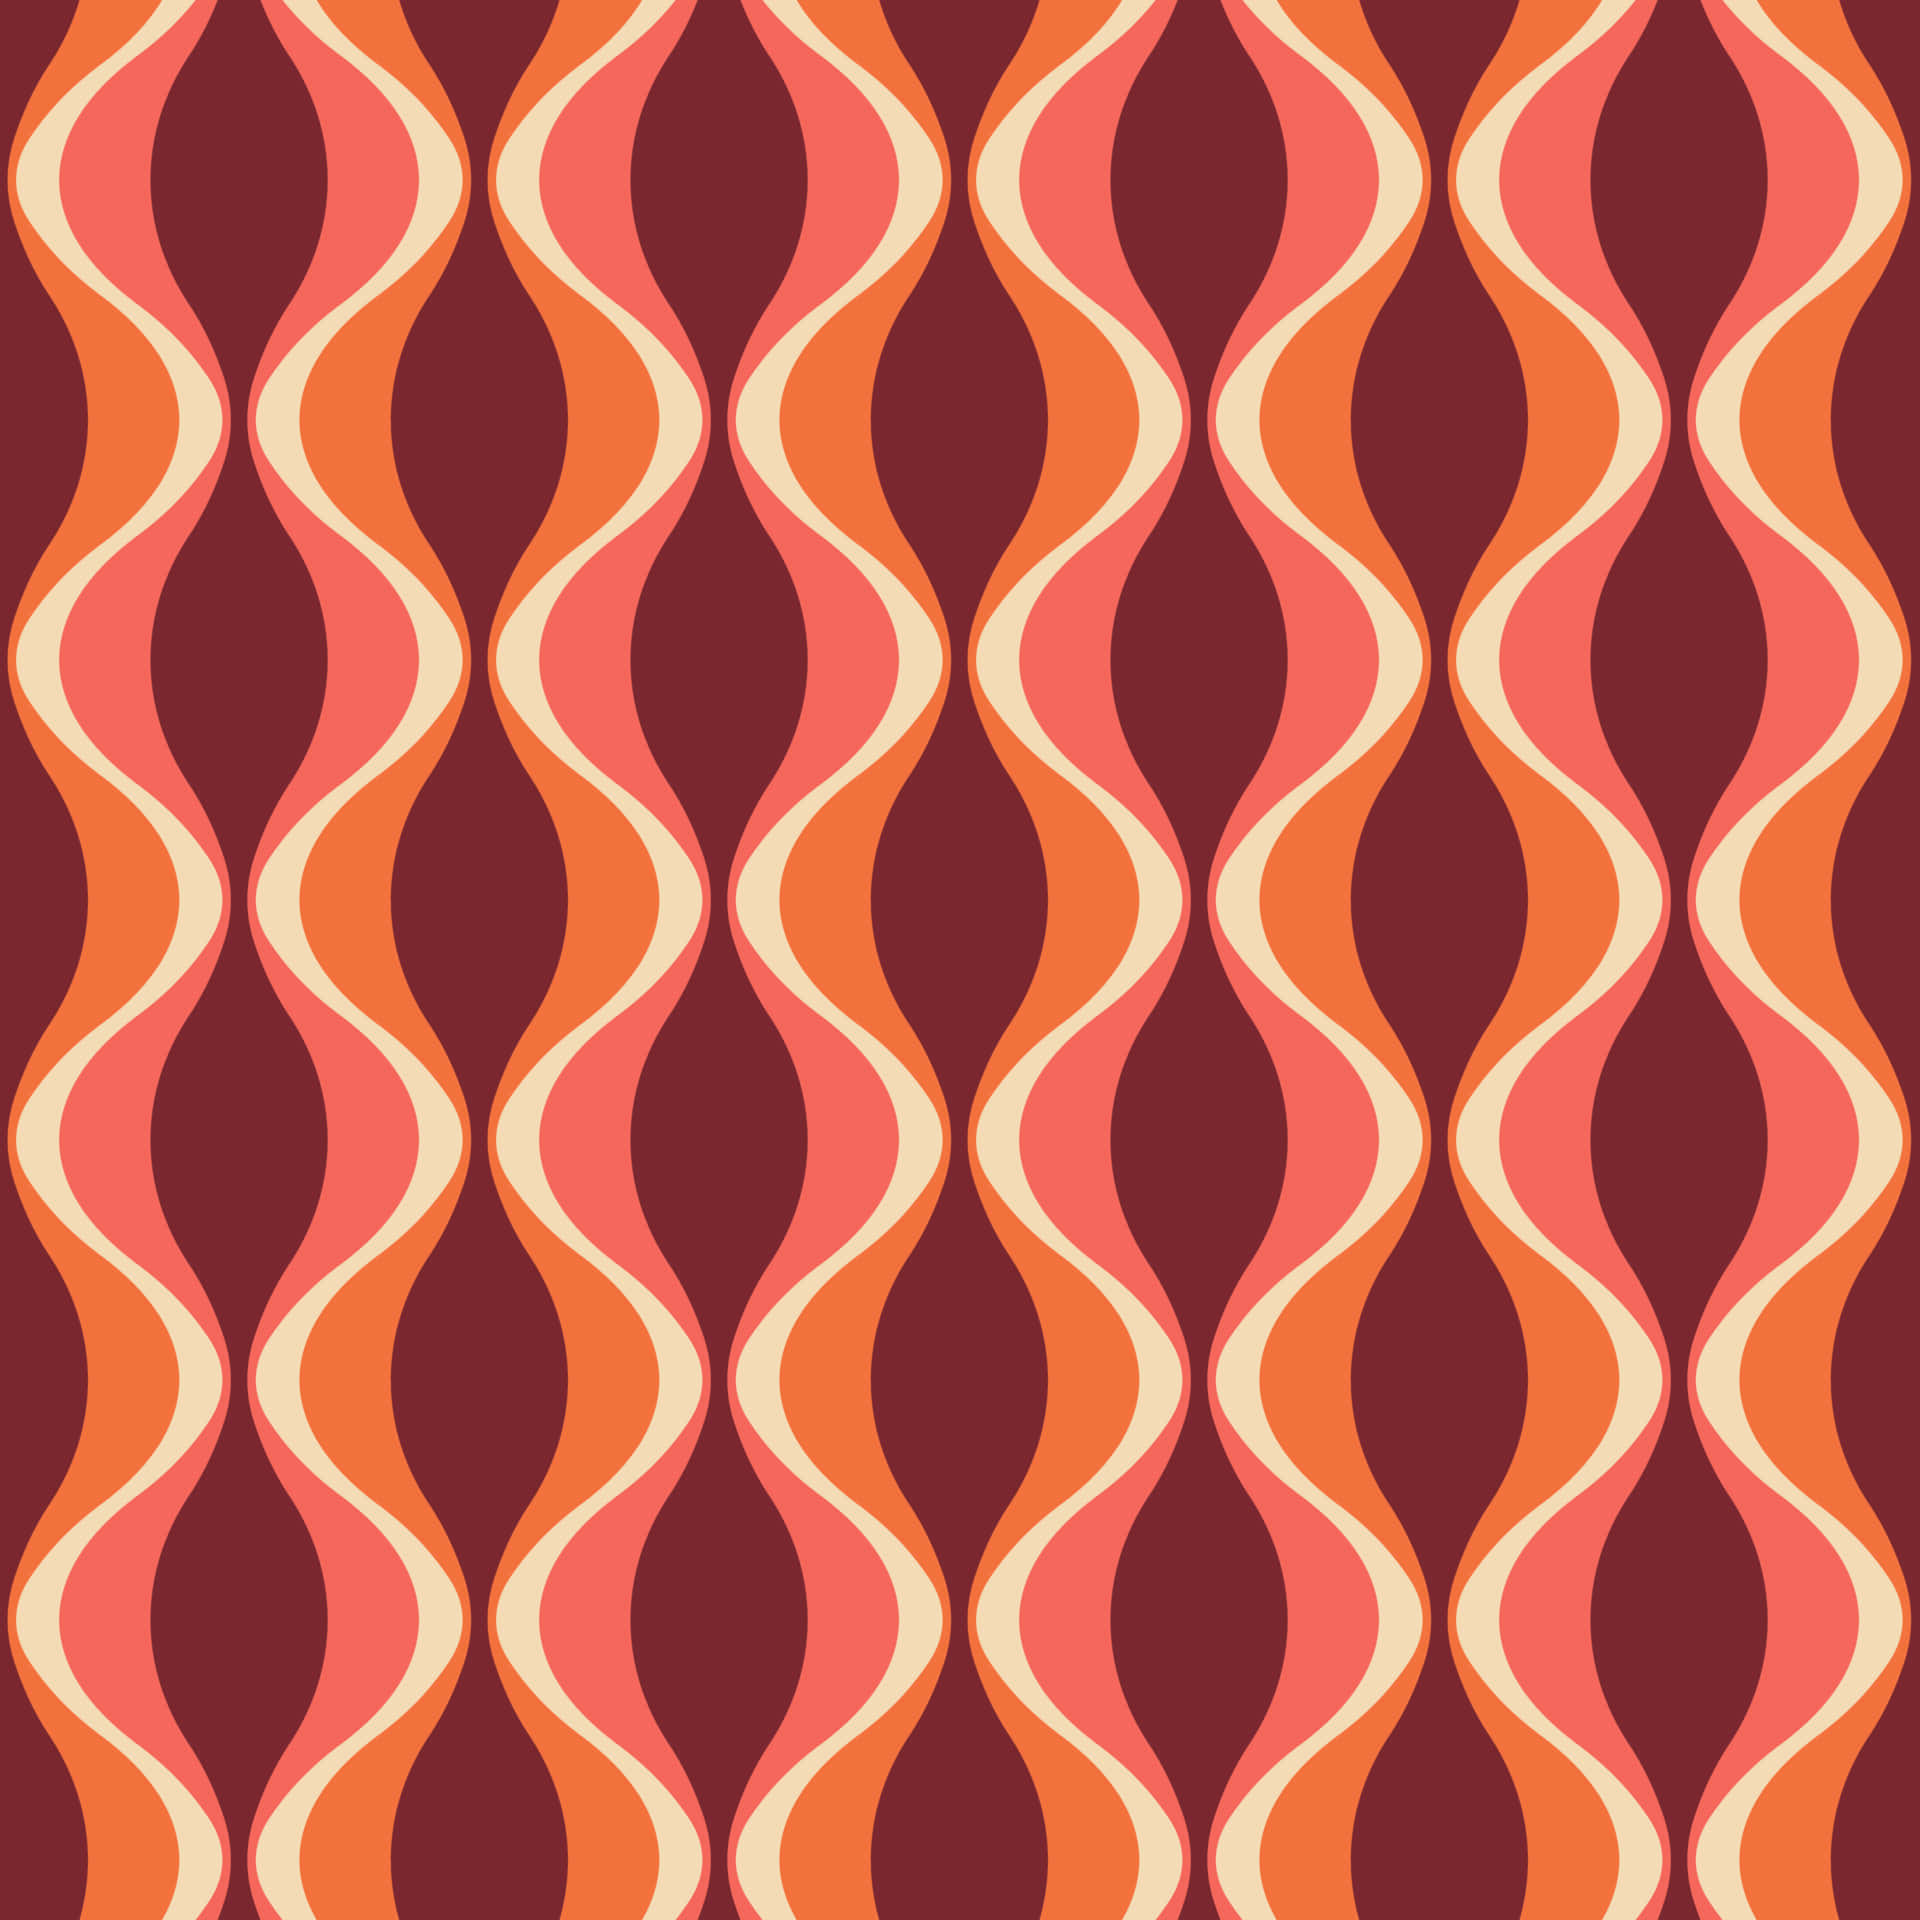 White, Orange, Brown Aesthetic 70s Background